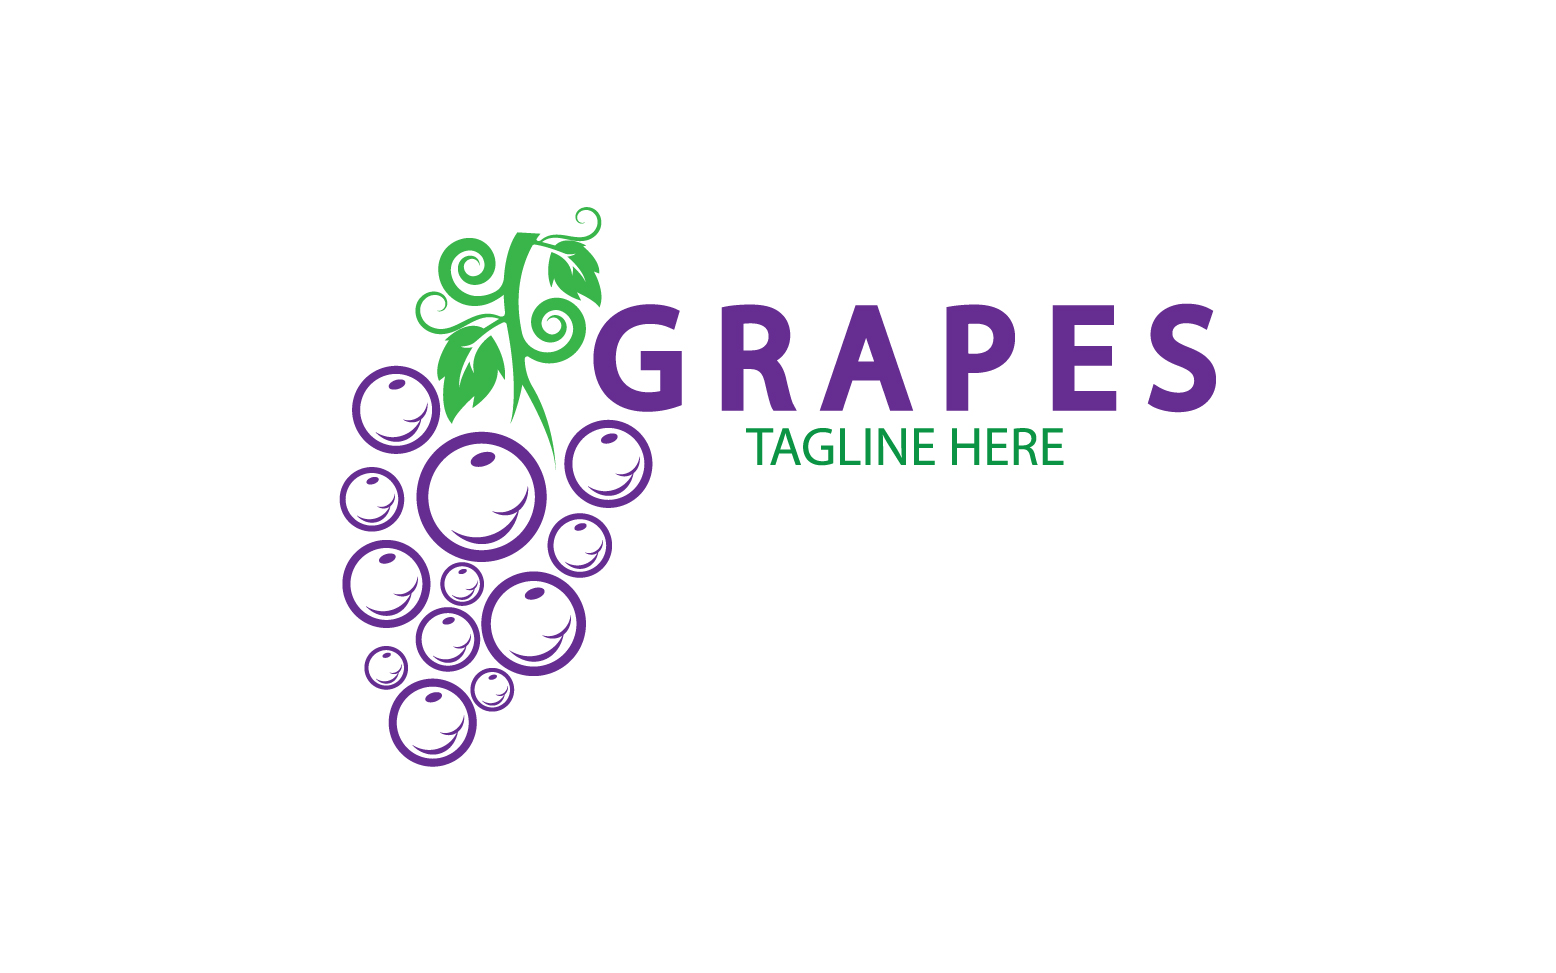 Grape fruits fresh icon logo v36